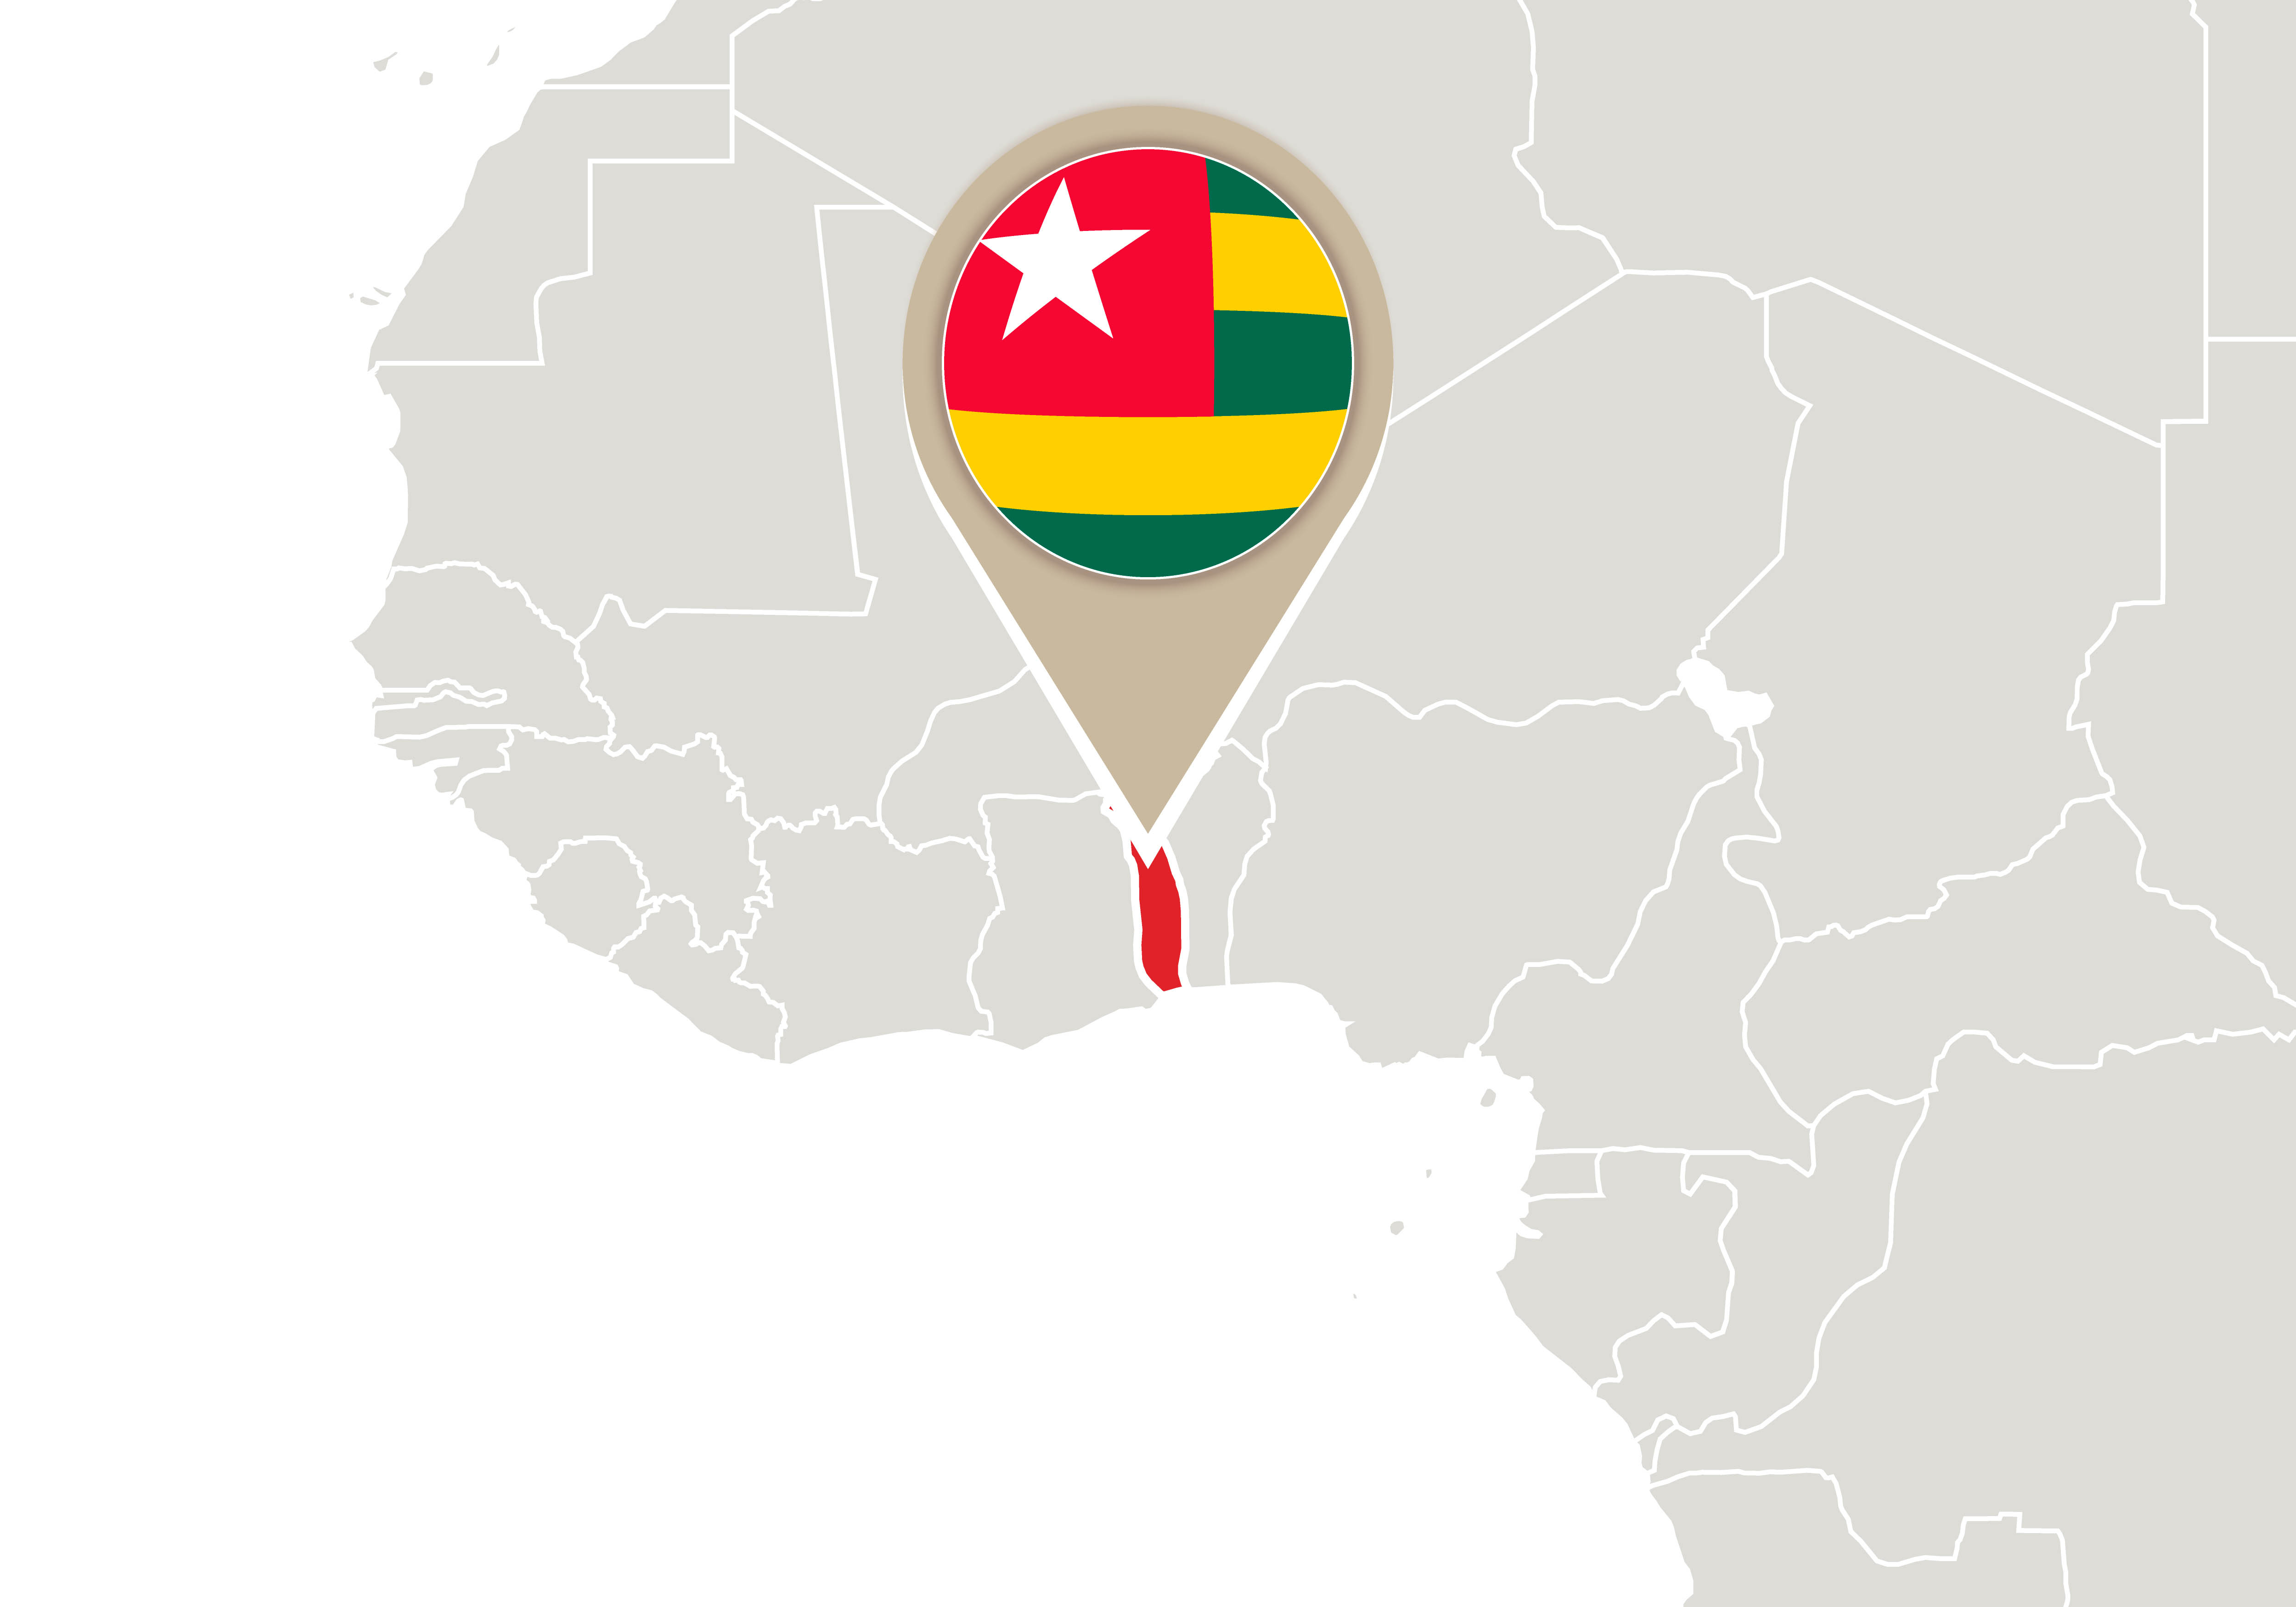 http://obatala.co.uk/wp-content/uploads/2015/08/Togo-map.jpg